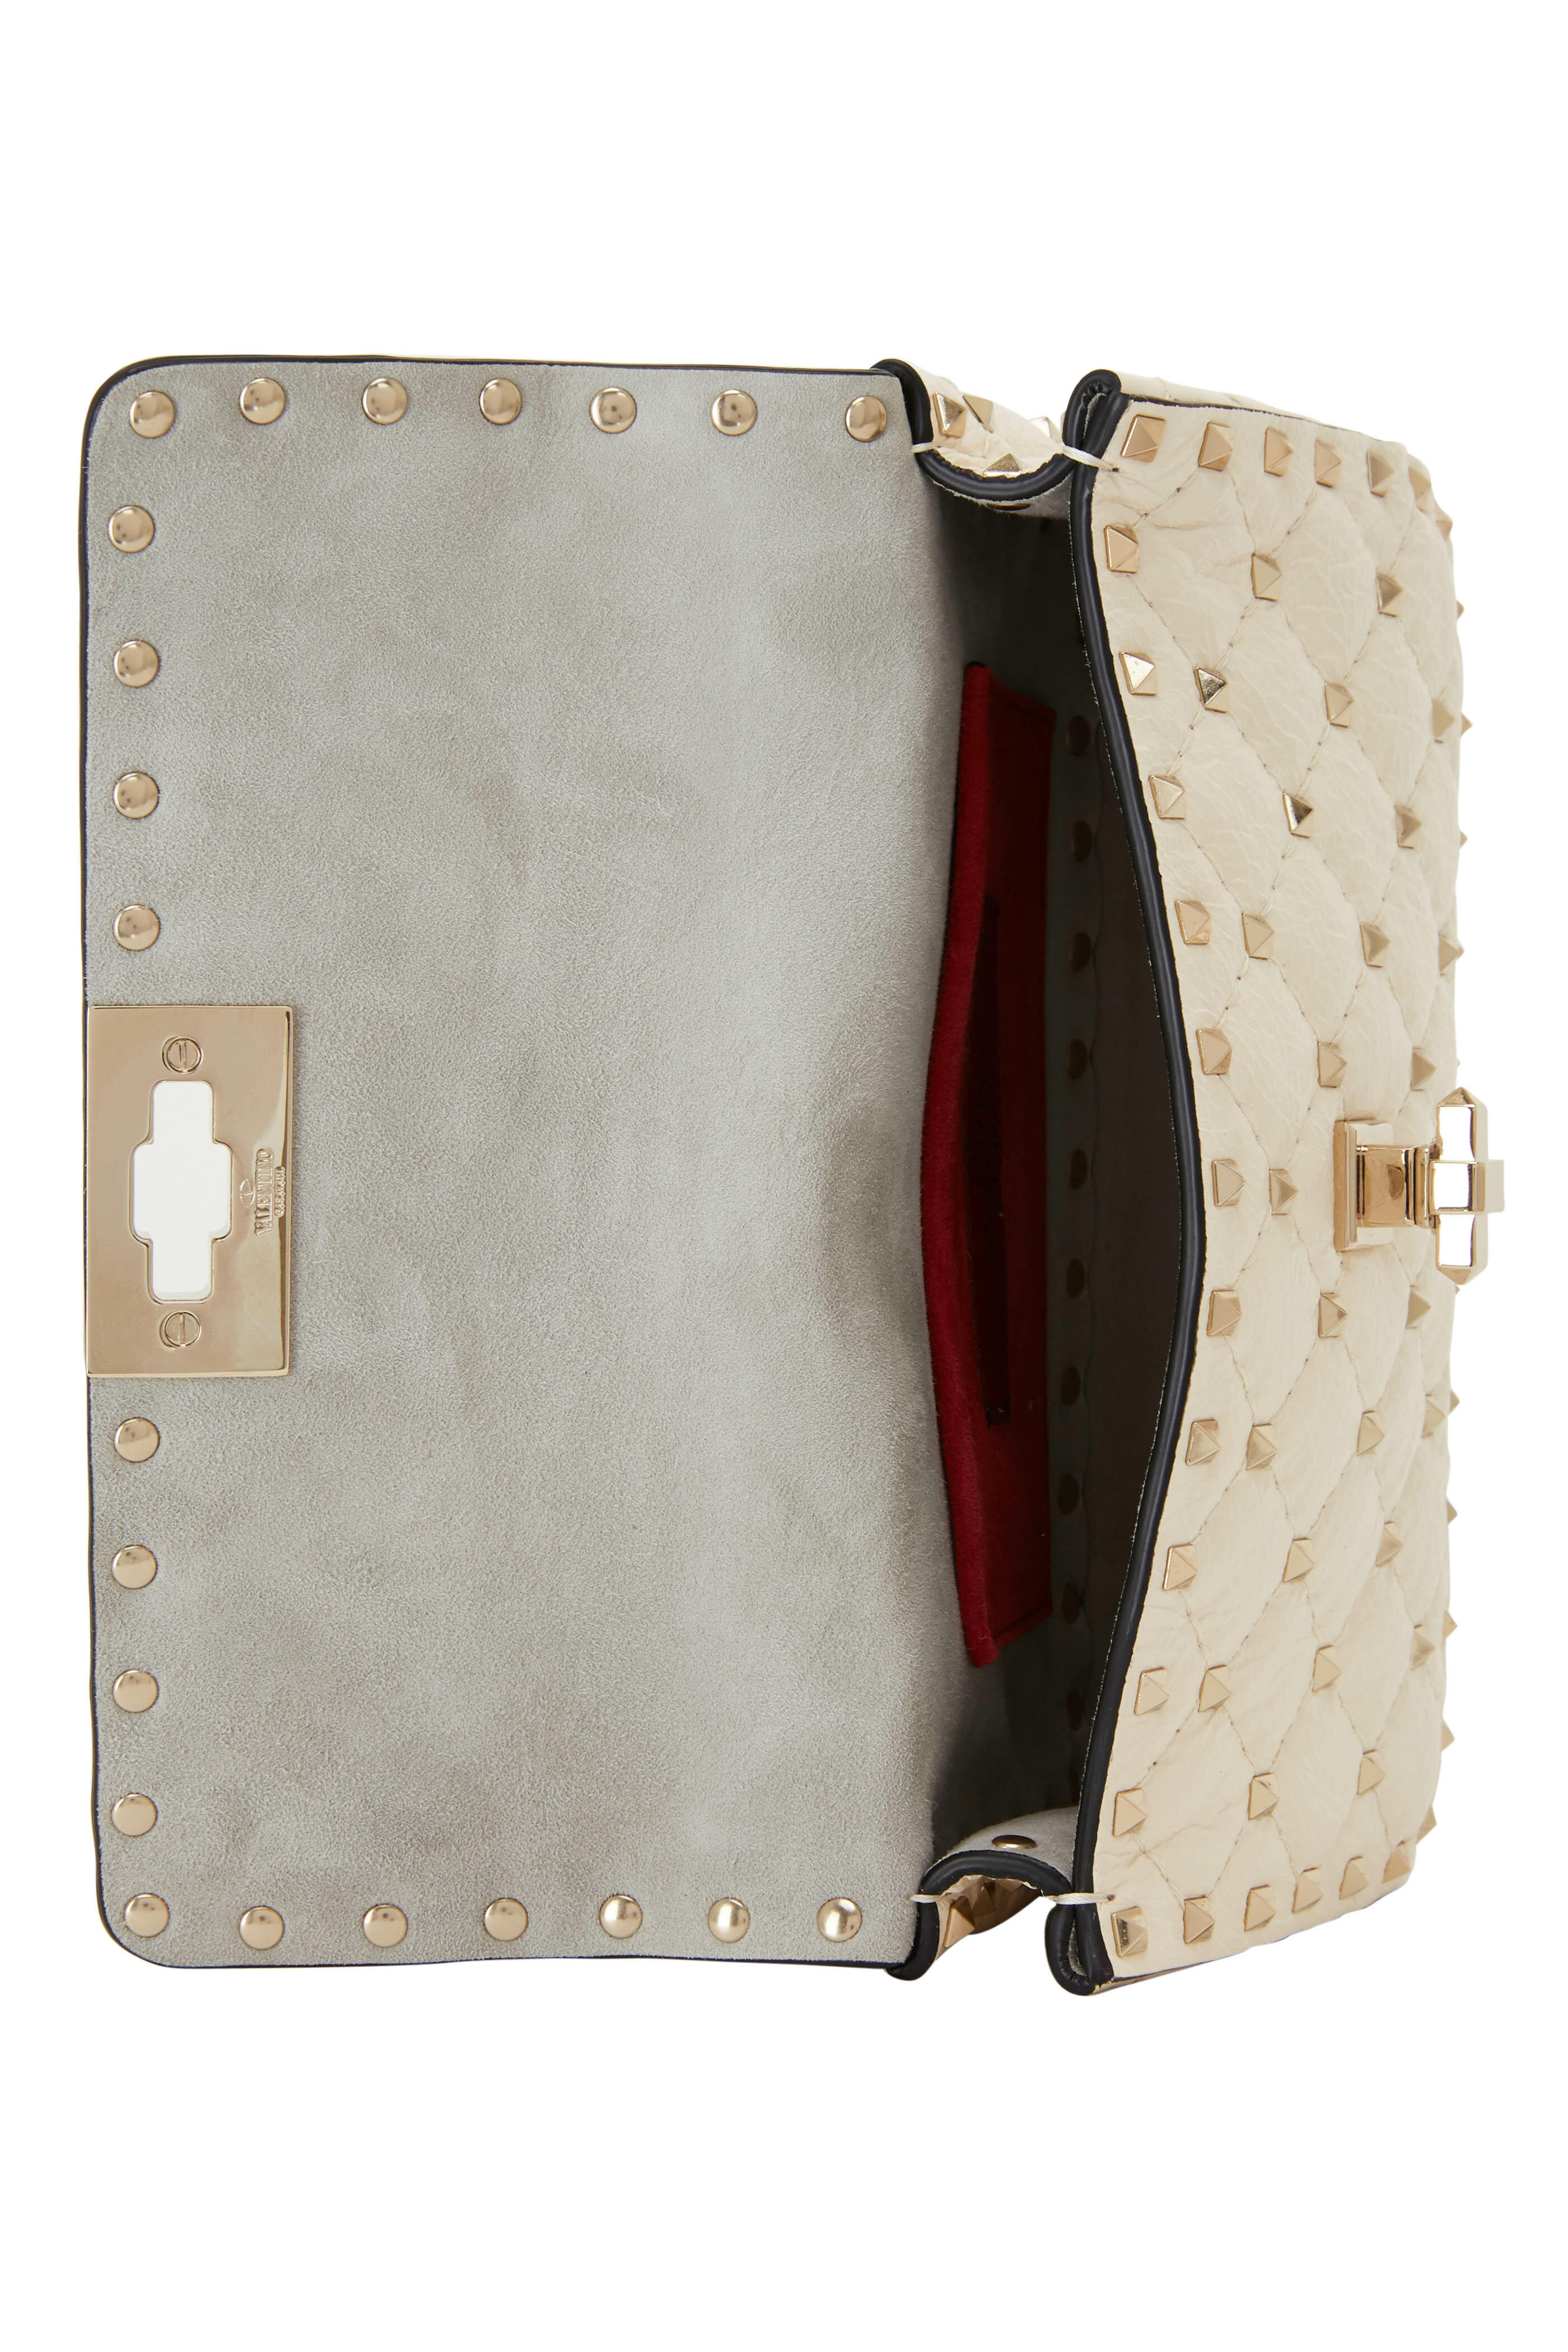 VALENTINO GARAVANI: Rockstud bag in grained leather - Blush Pink